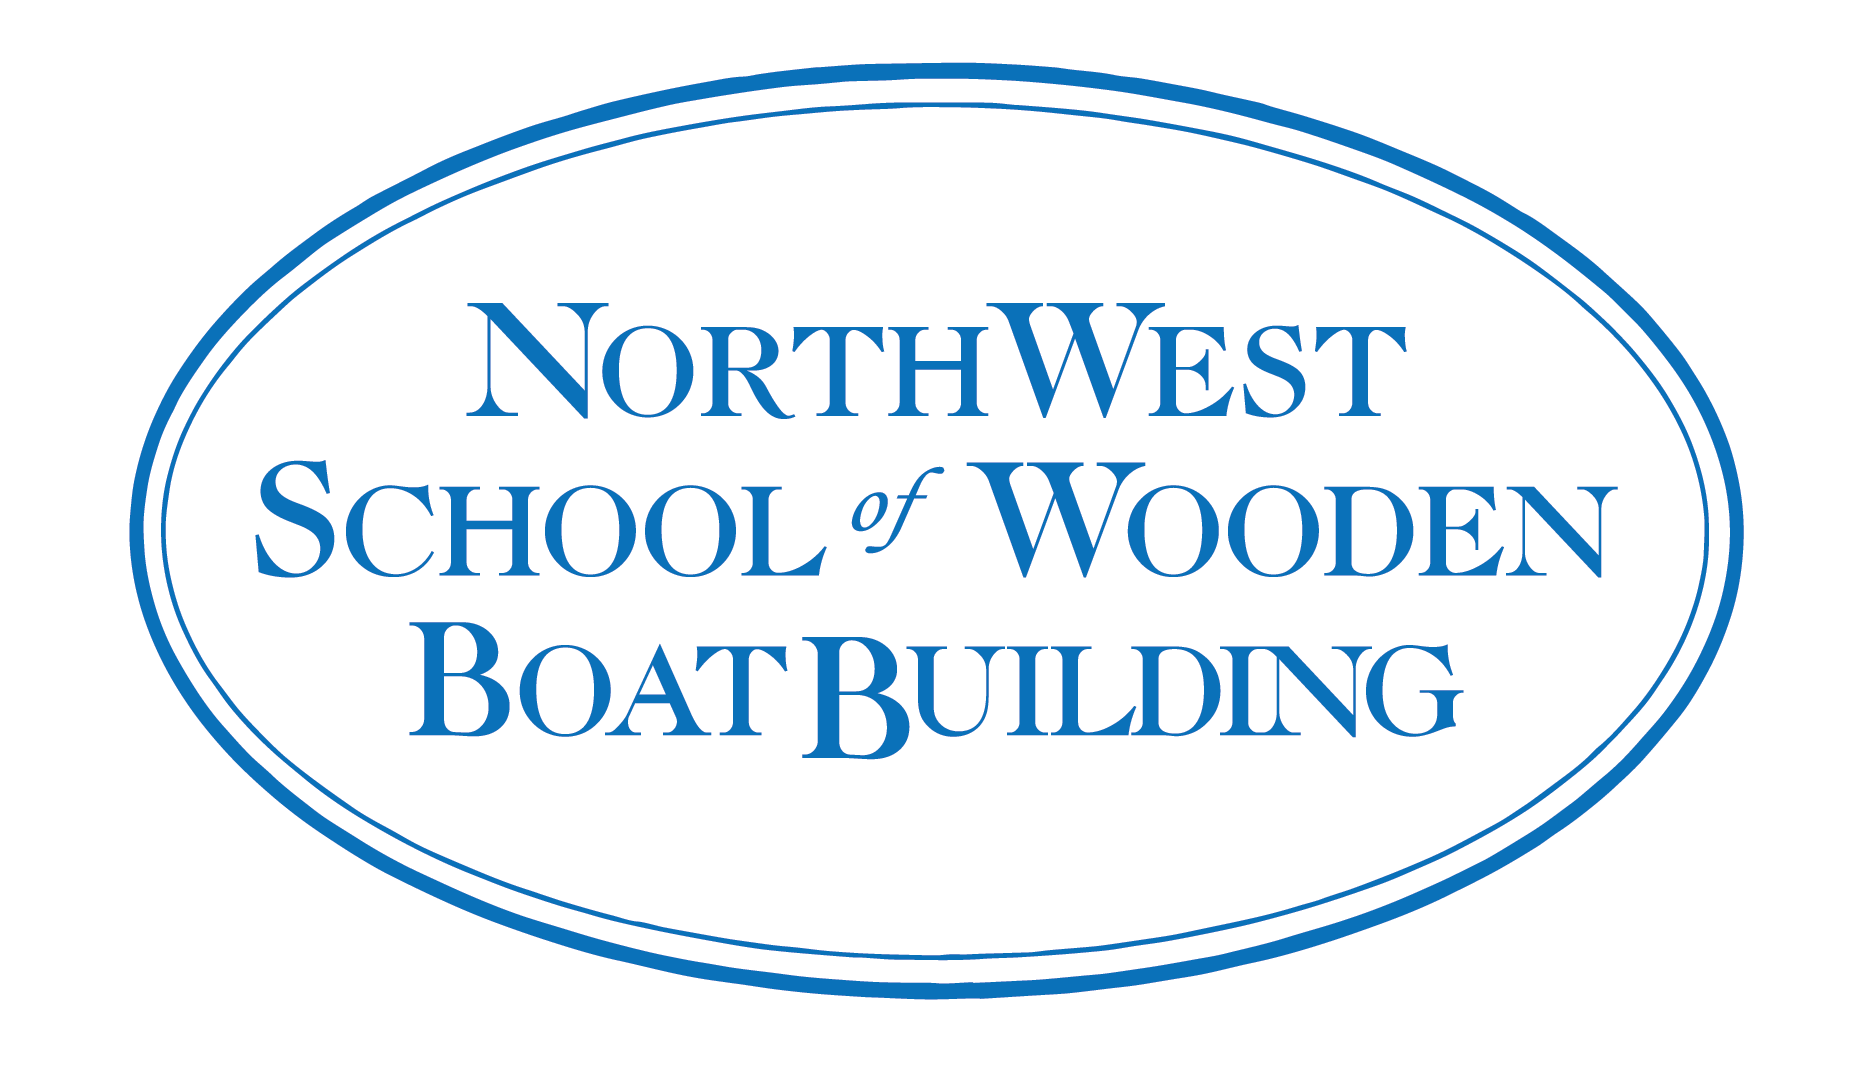 Northwest School of Wooden BoatBuilding - Make a Living 